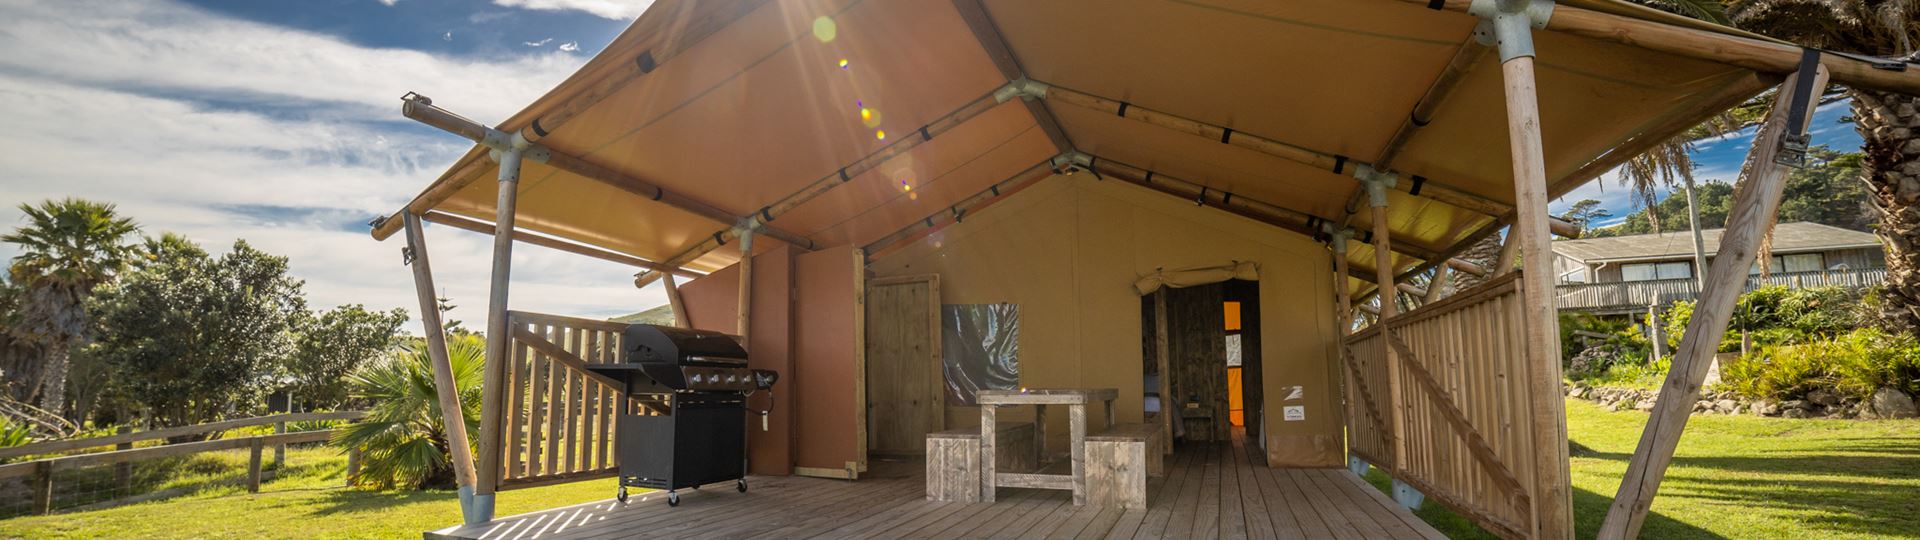 Sarafi Tent